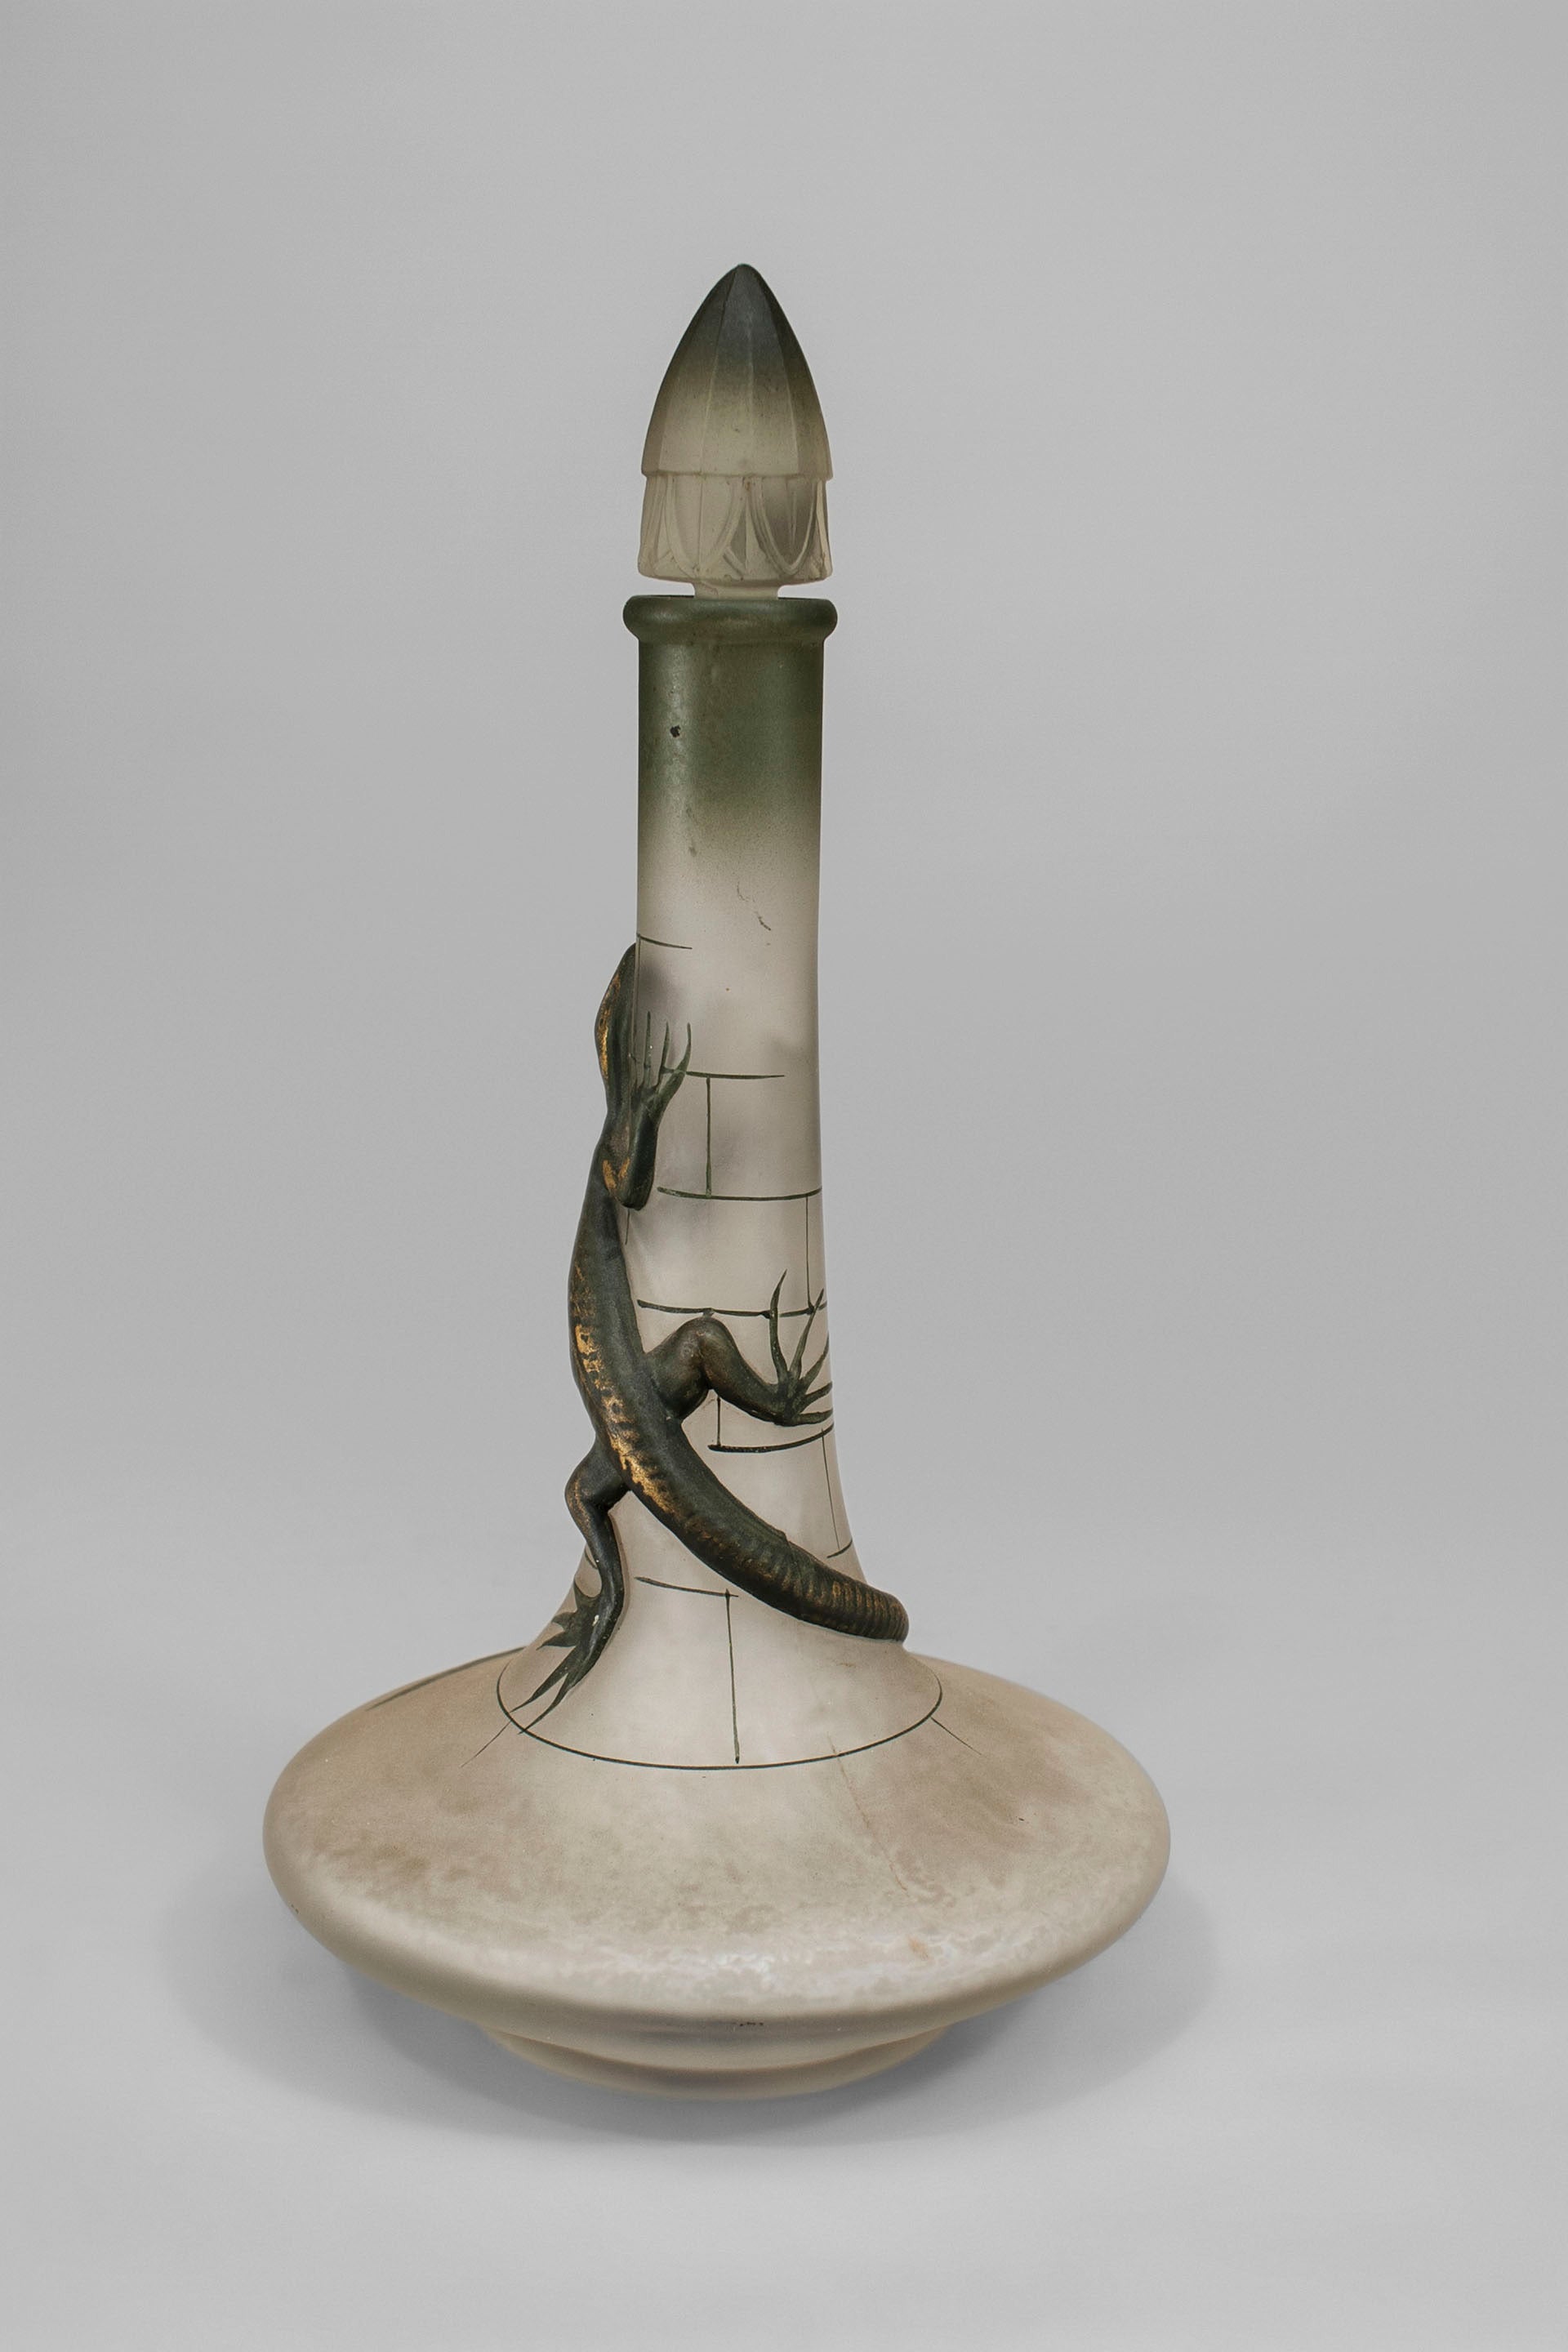 French Art Nouveau Perfume Bottle for "Au Soleil" by Lubin